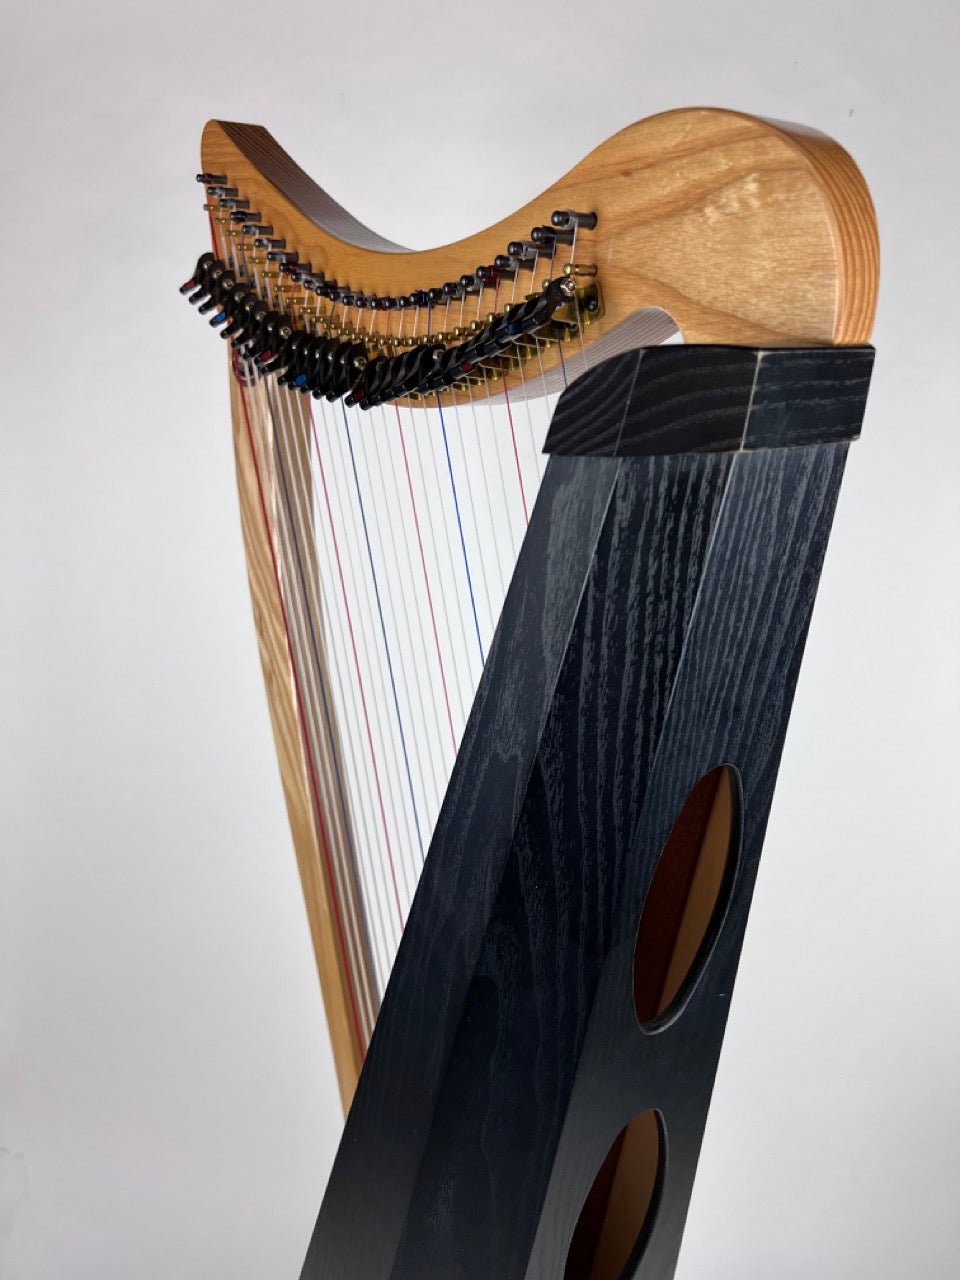 USED Dusty Strings Ravenna 26 Harp